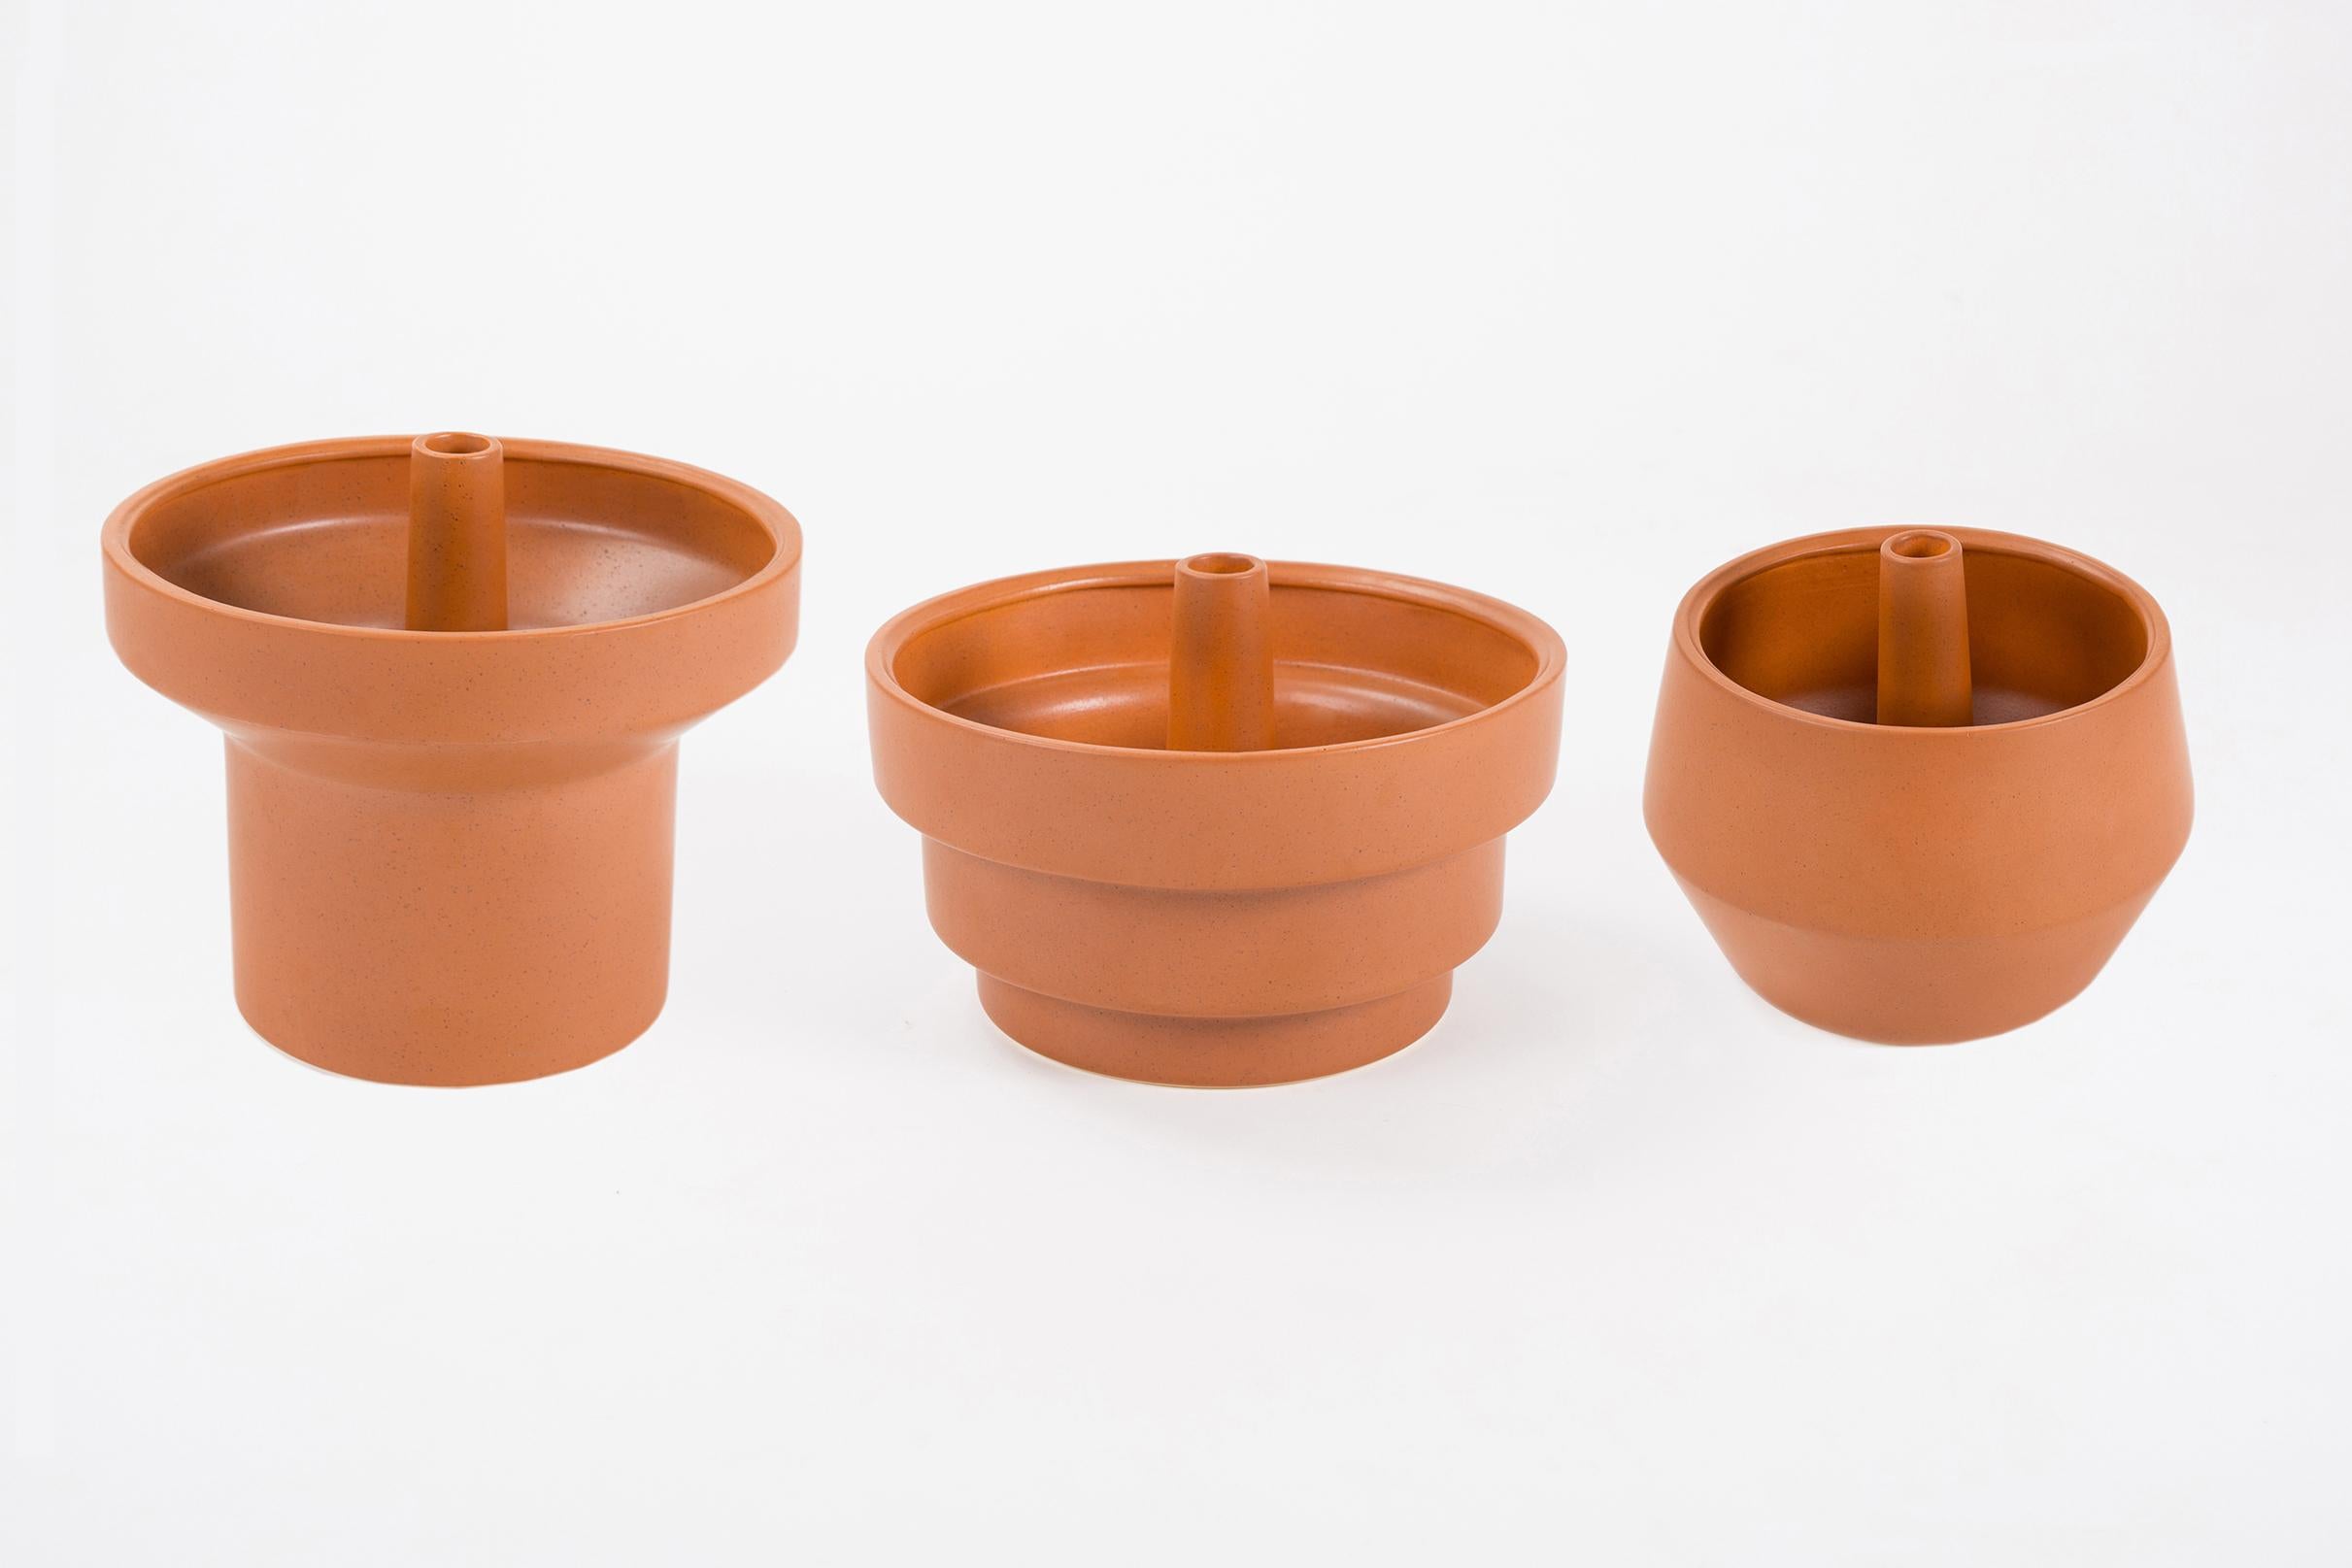 Trinum Small Pedestal with Ceramic Planters, Contemporary Mexican Design Small 1